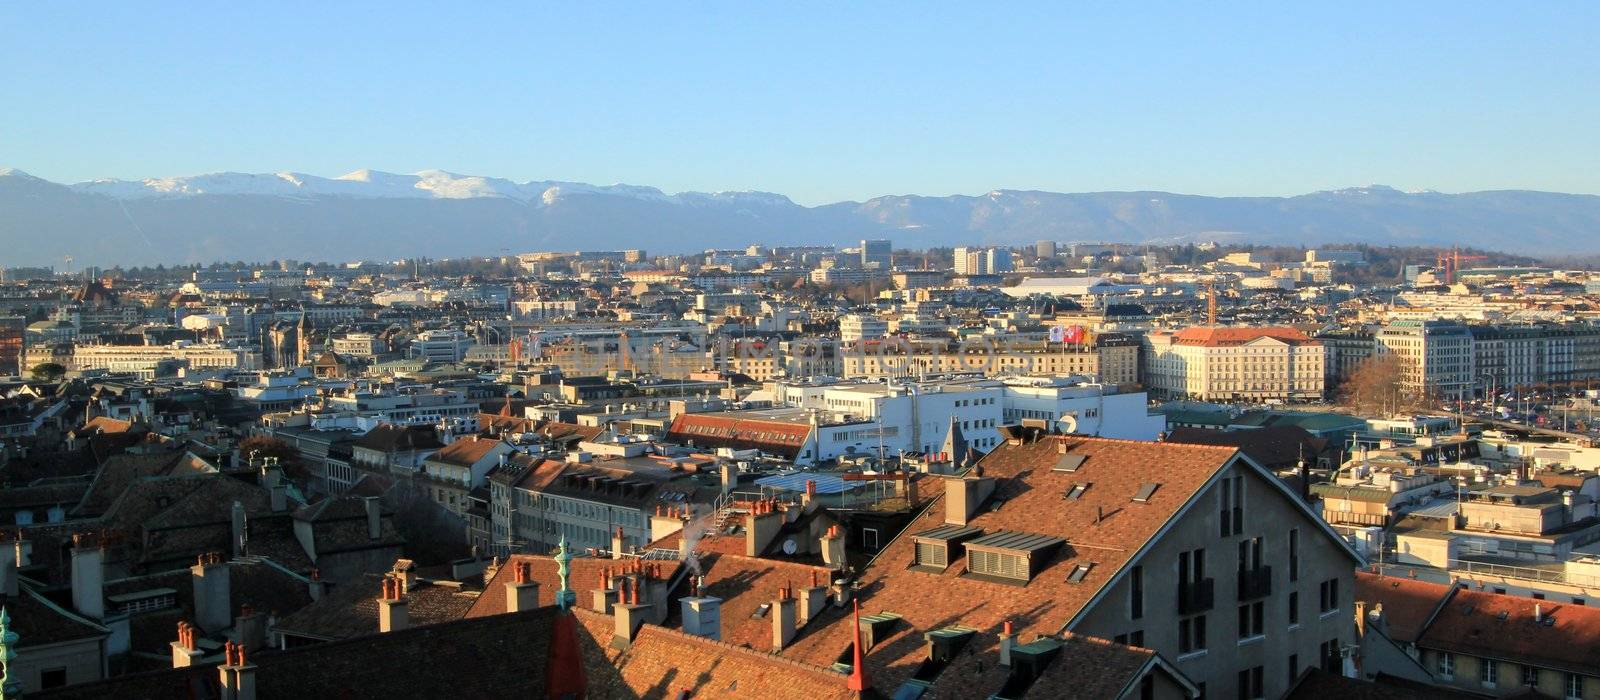 Geneva city, Switzerland by Elenaphotos21